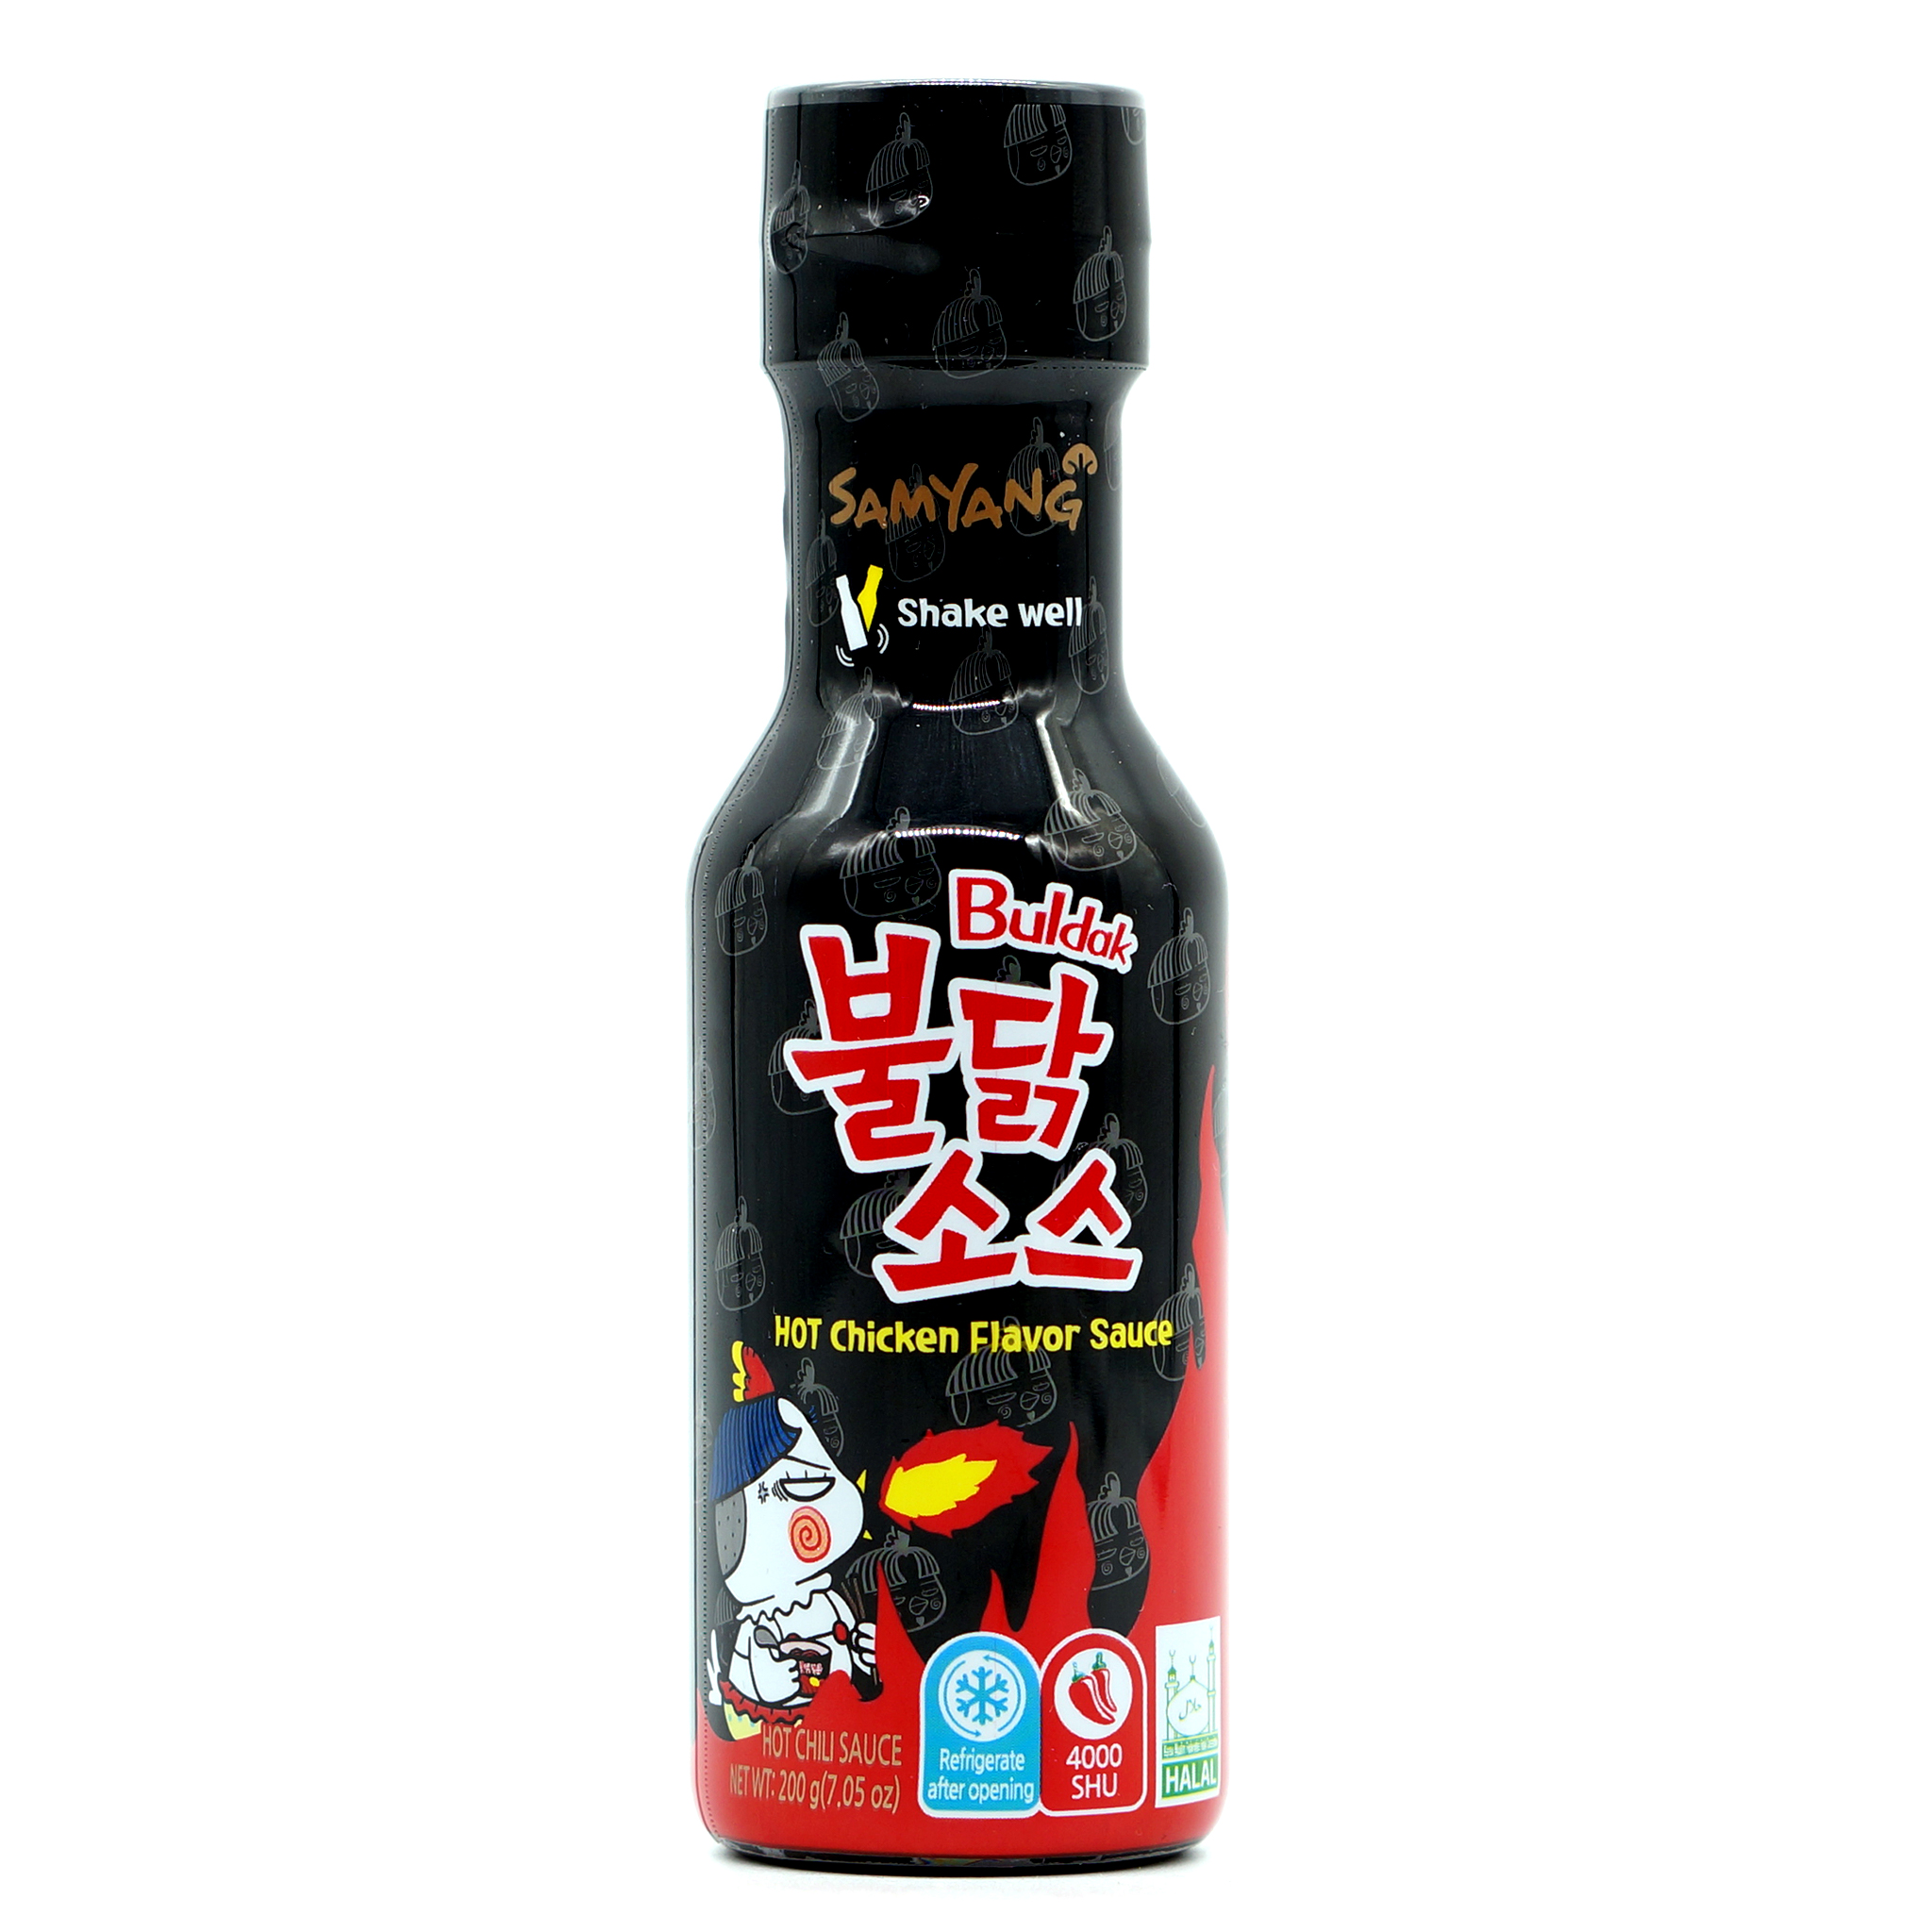 Buldak scharfe Sauce mit Hühnchengeschmack - Samyang - 200g